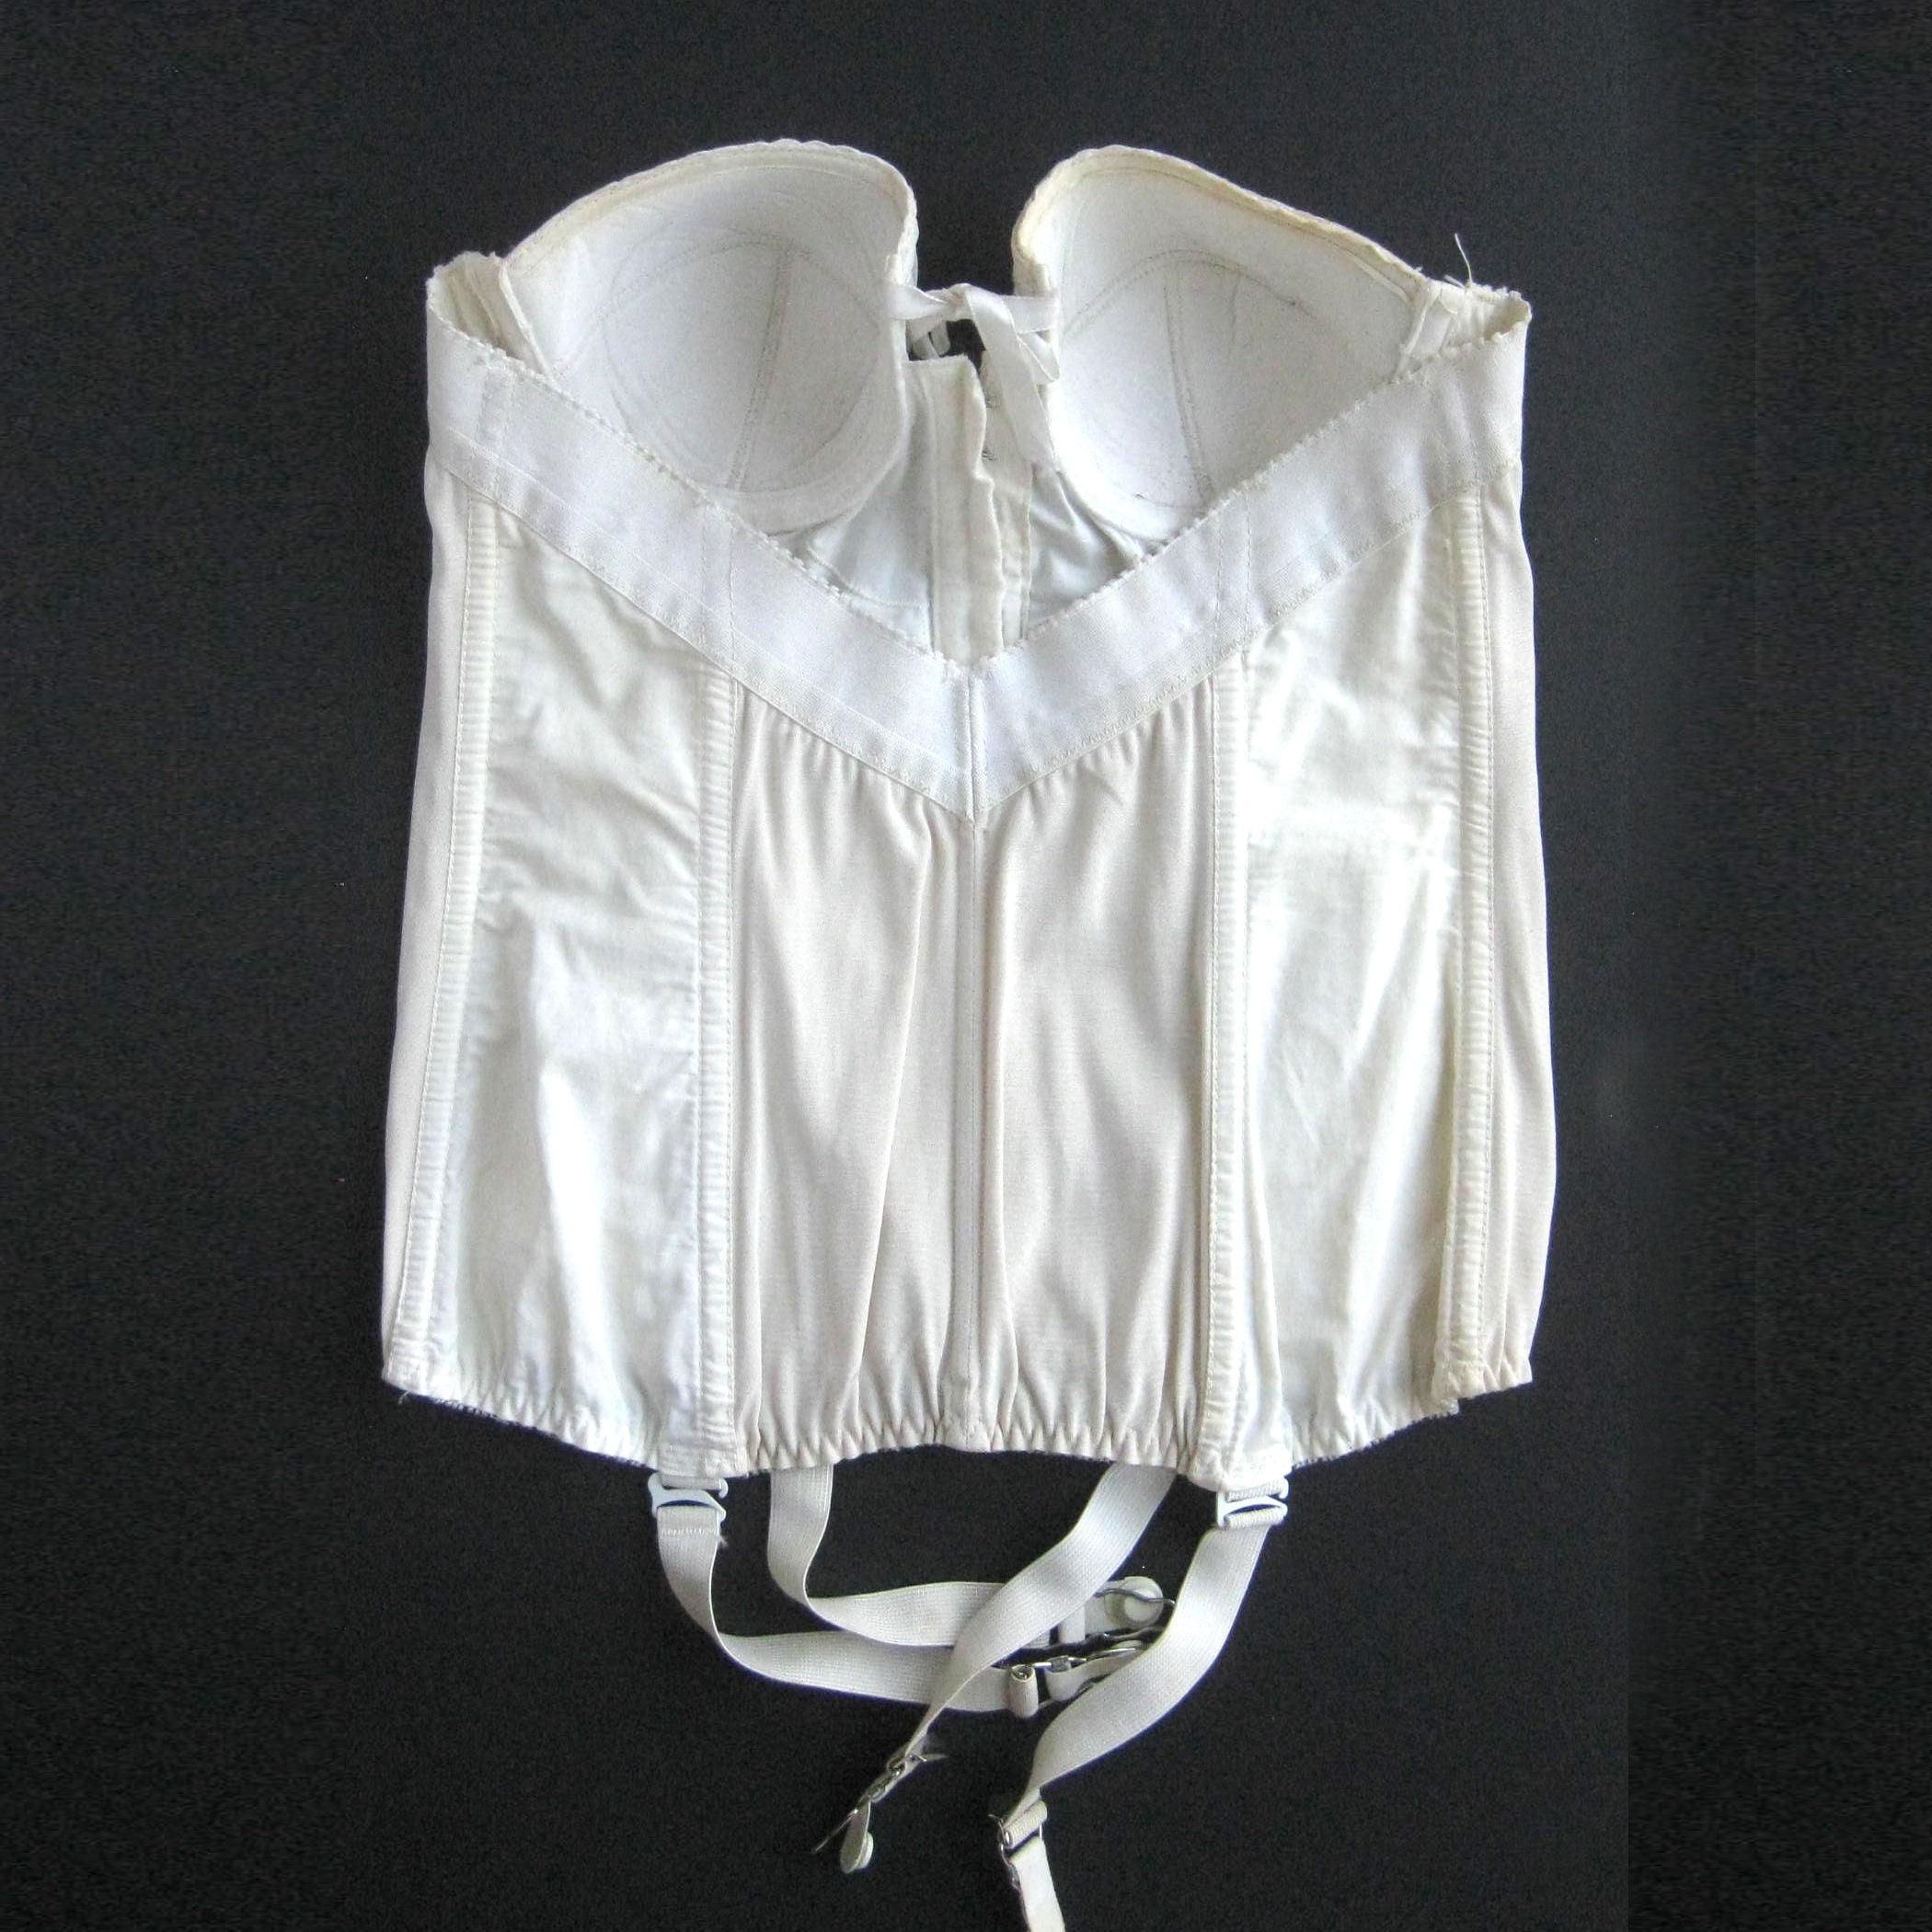 Vintage 40s 50s White Girdle Garter Belt / Girdle Skirt / Adjustable, Erratic Static Vintage